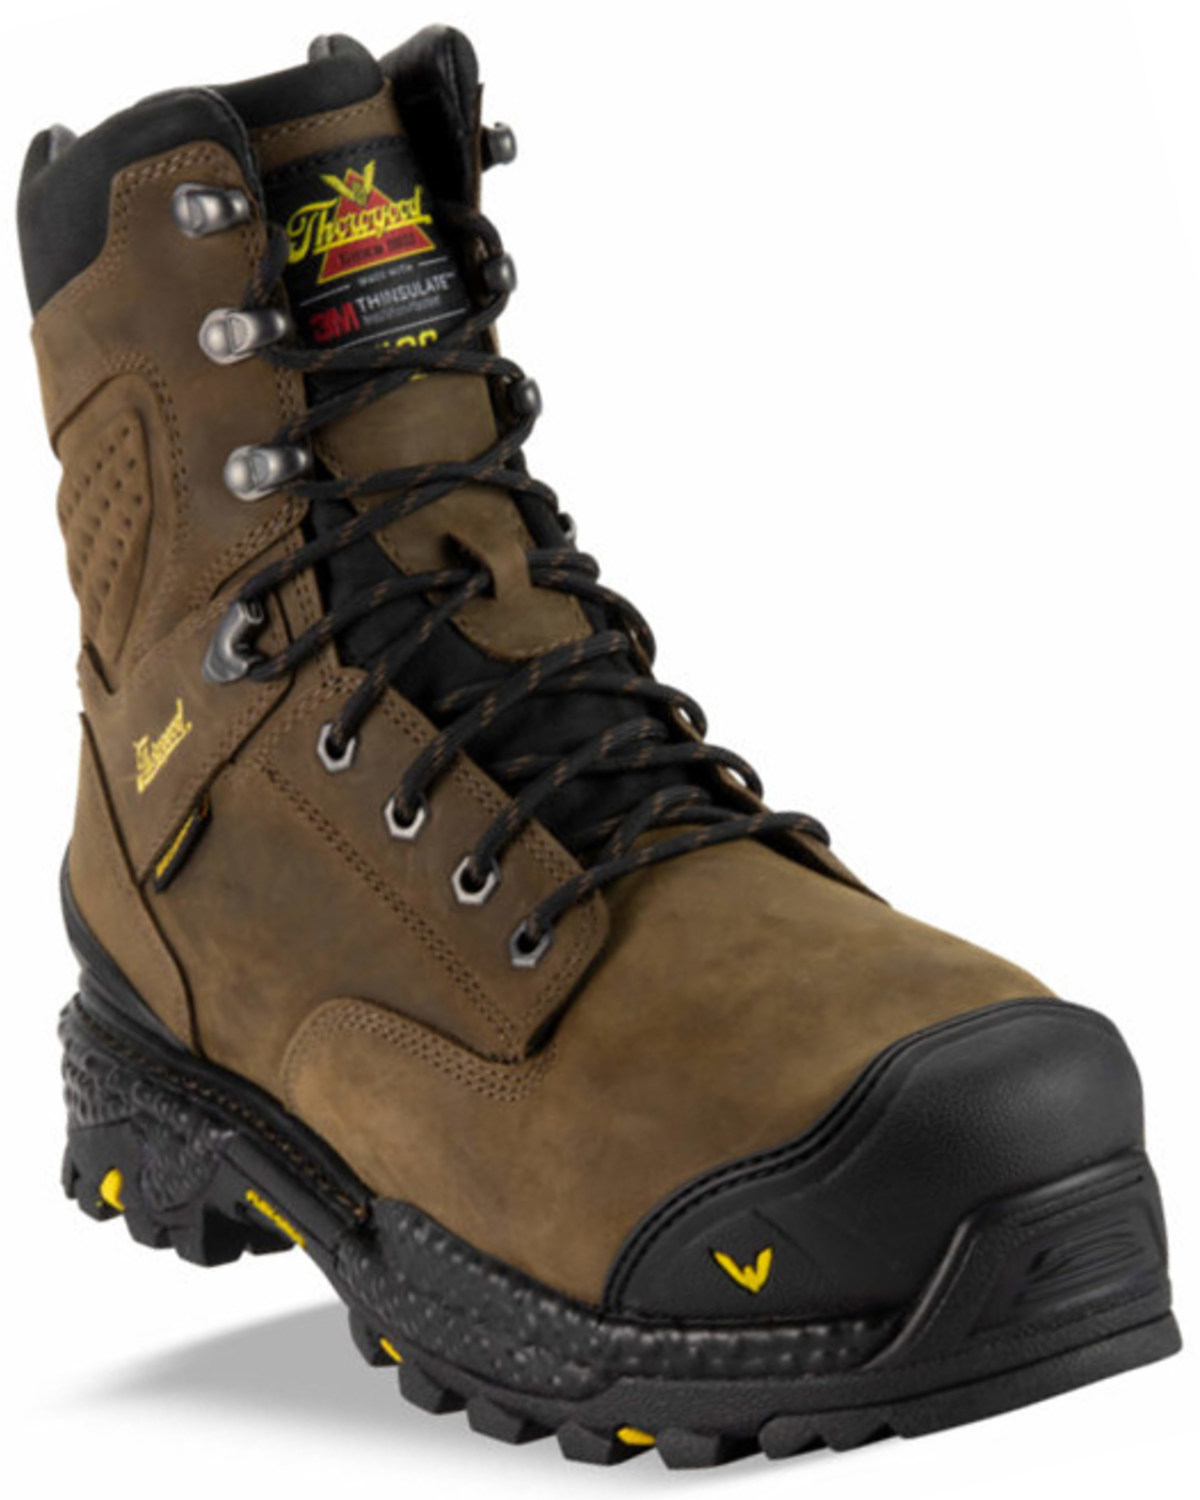 Thorogood Men's Infinity FD Series Waterproof Work Boots - Composite Toe